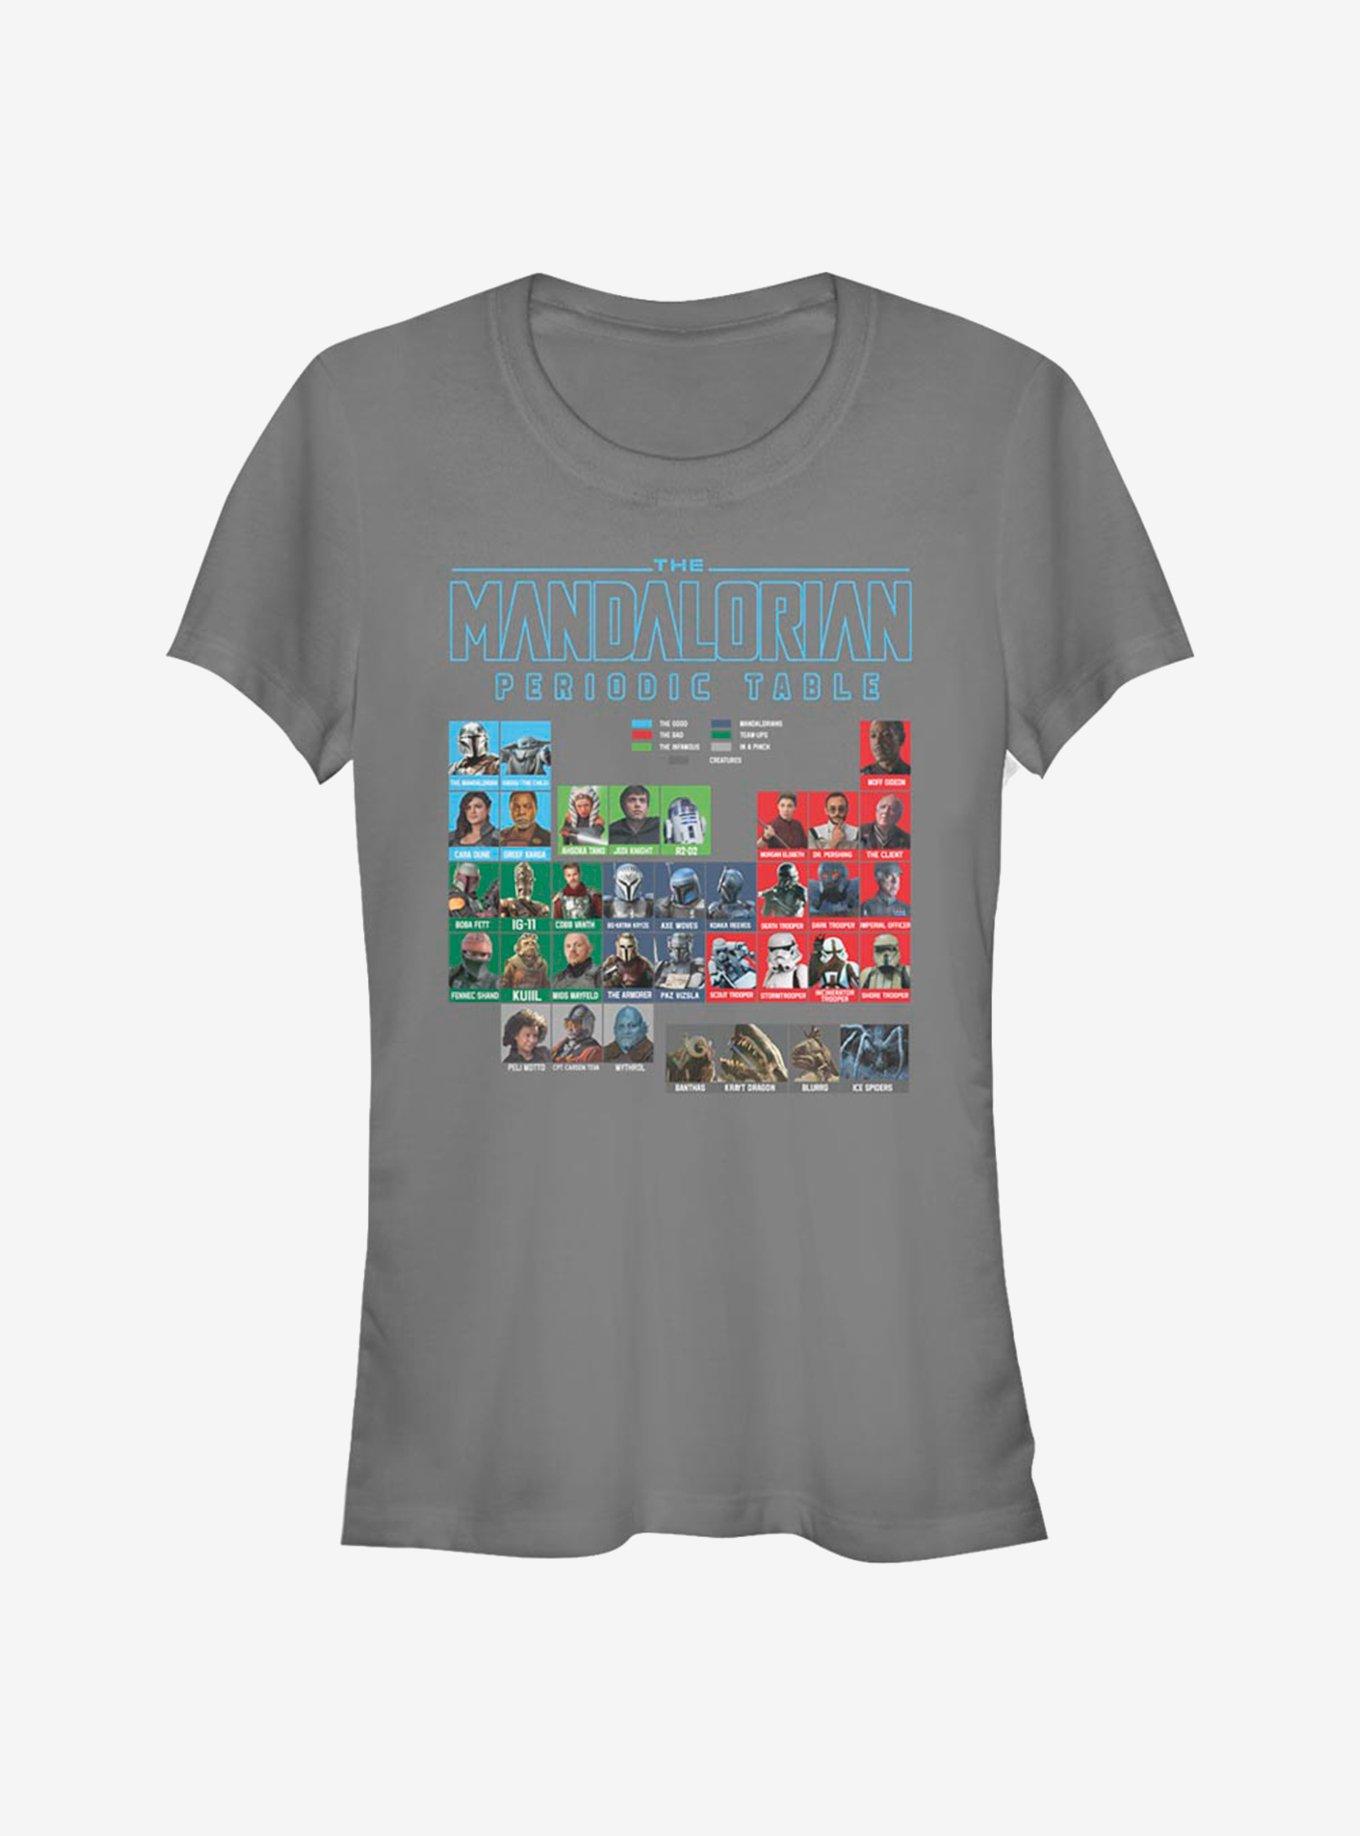 Star Wars The Mandalorian Periodic Table Girls T-Shirt